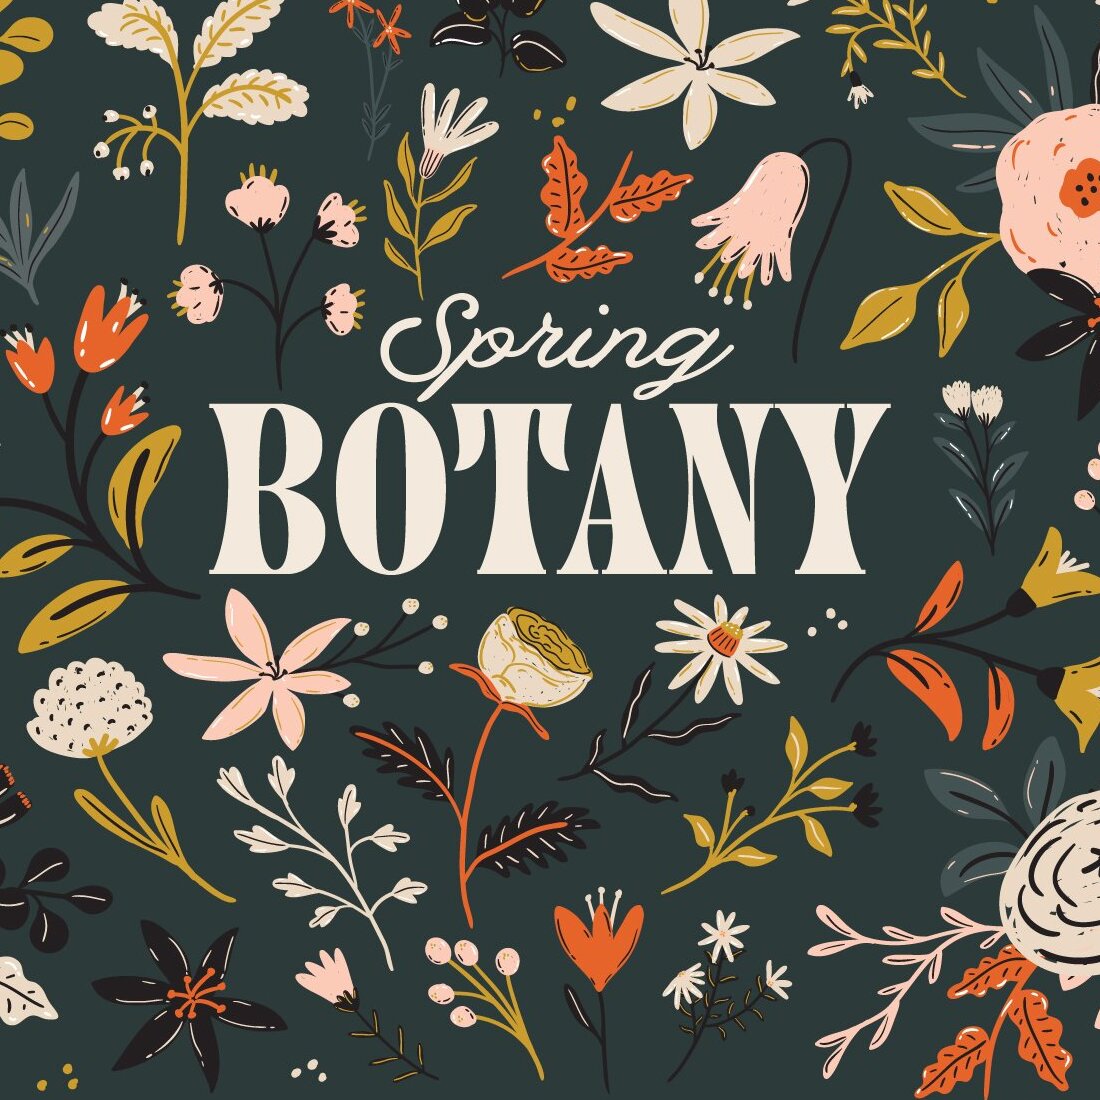 Seasonal Botany main cover.